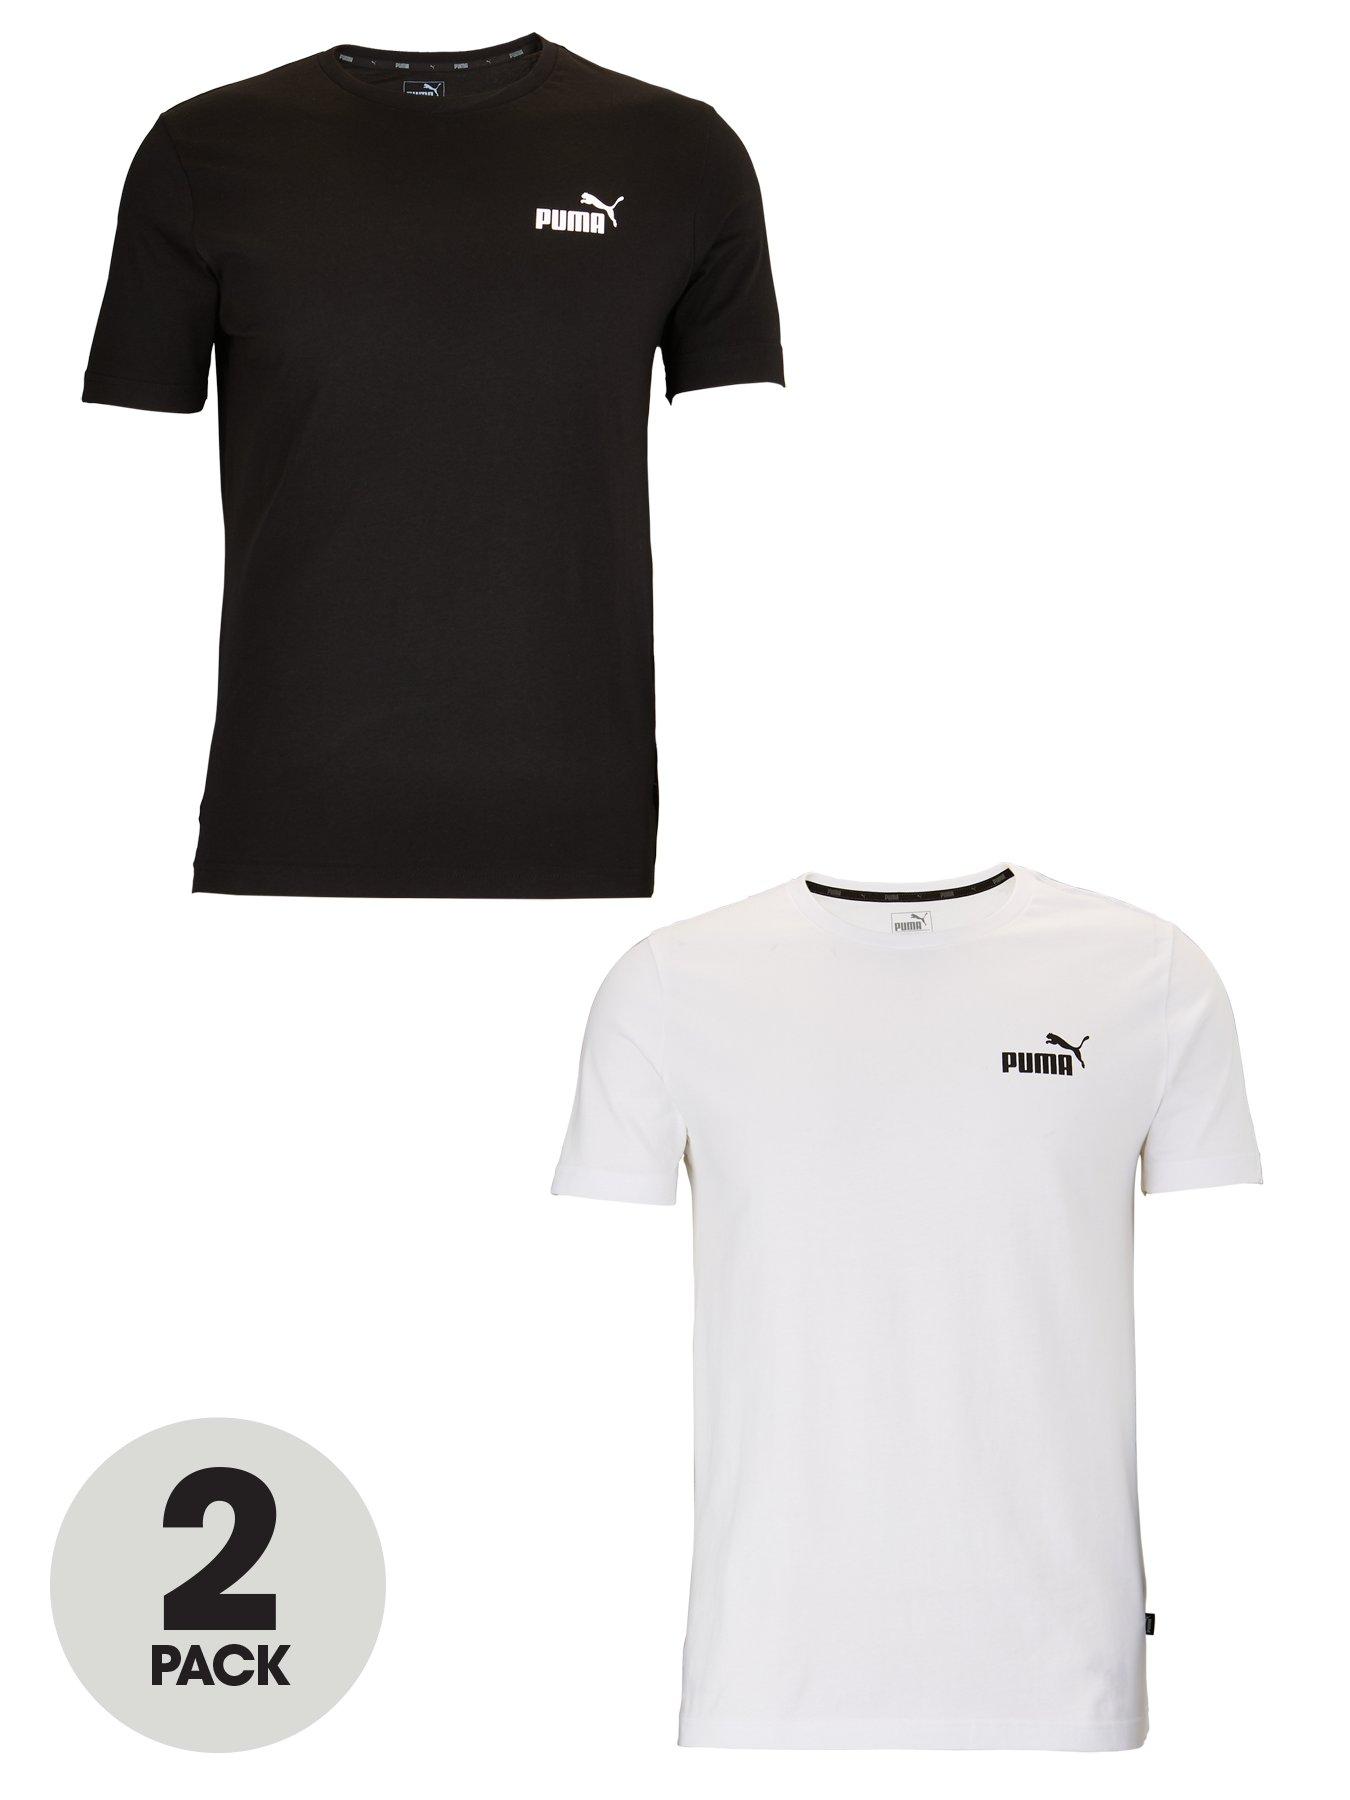 white and black puma shirt